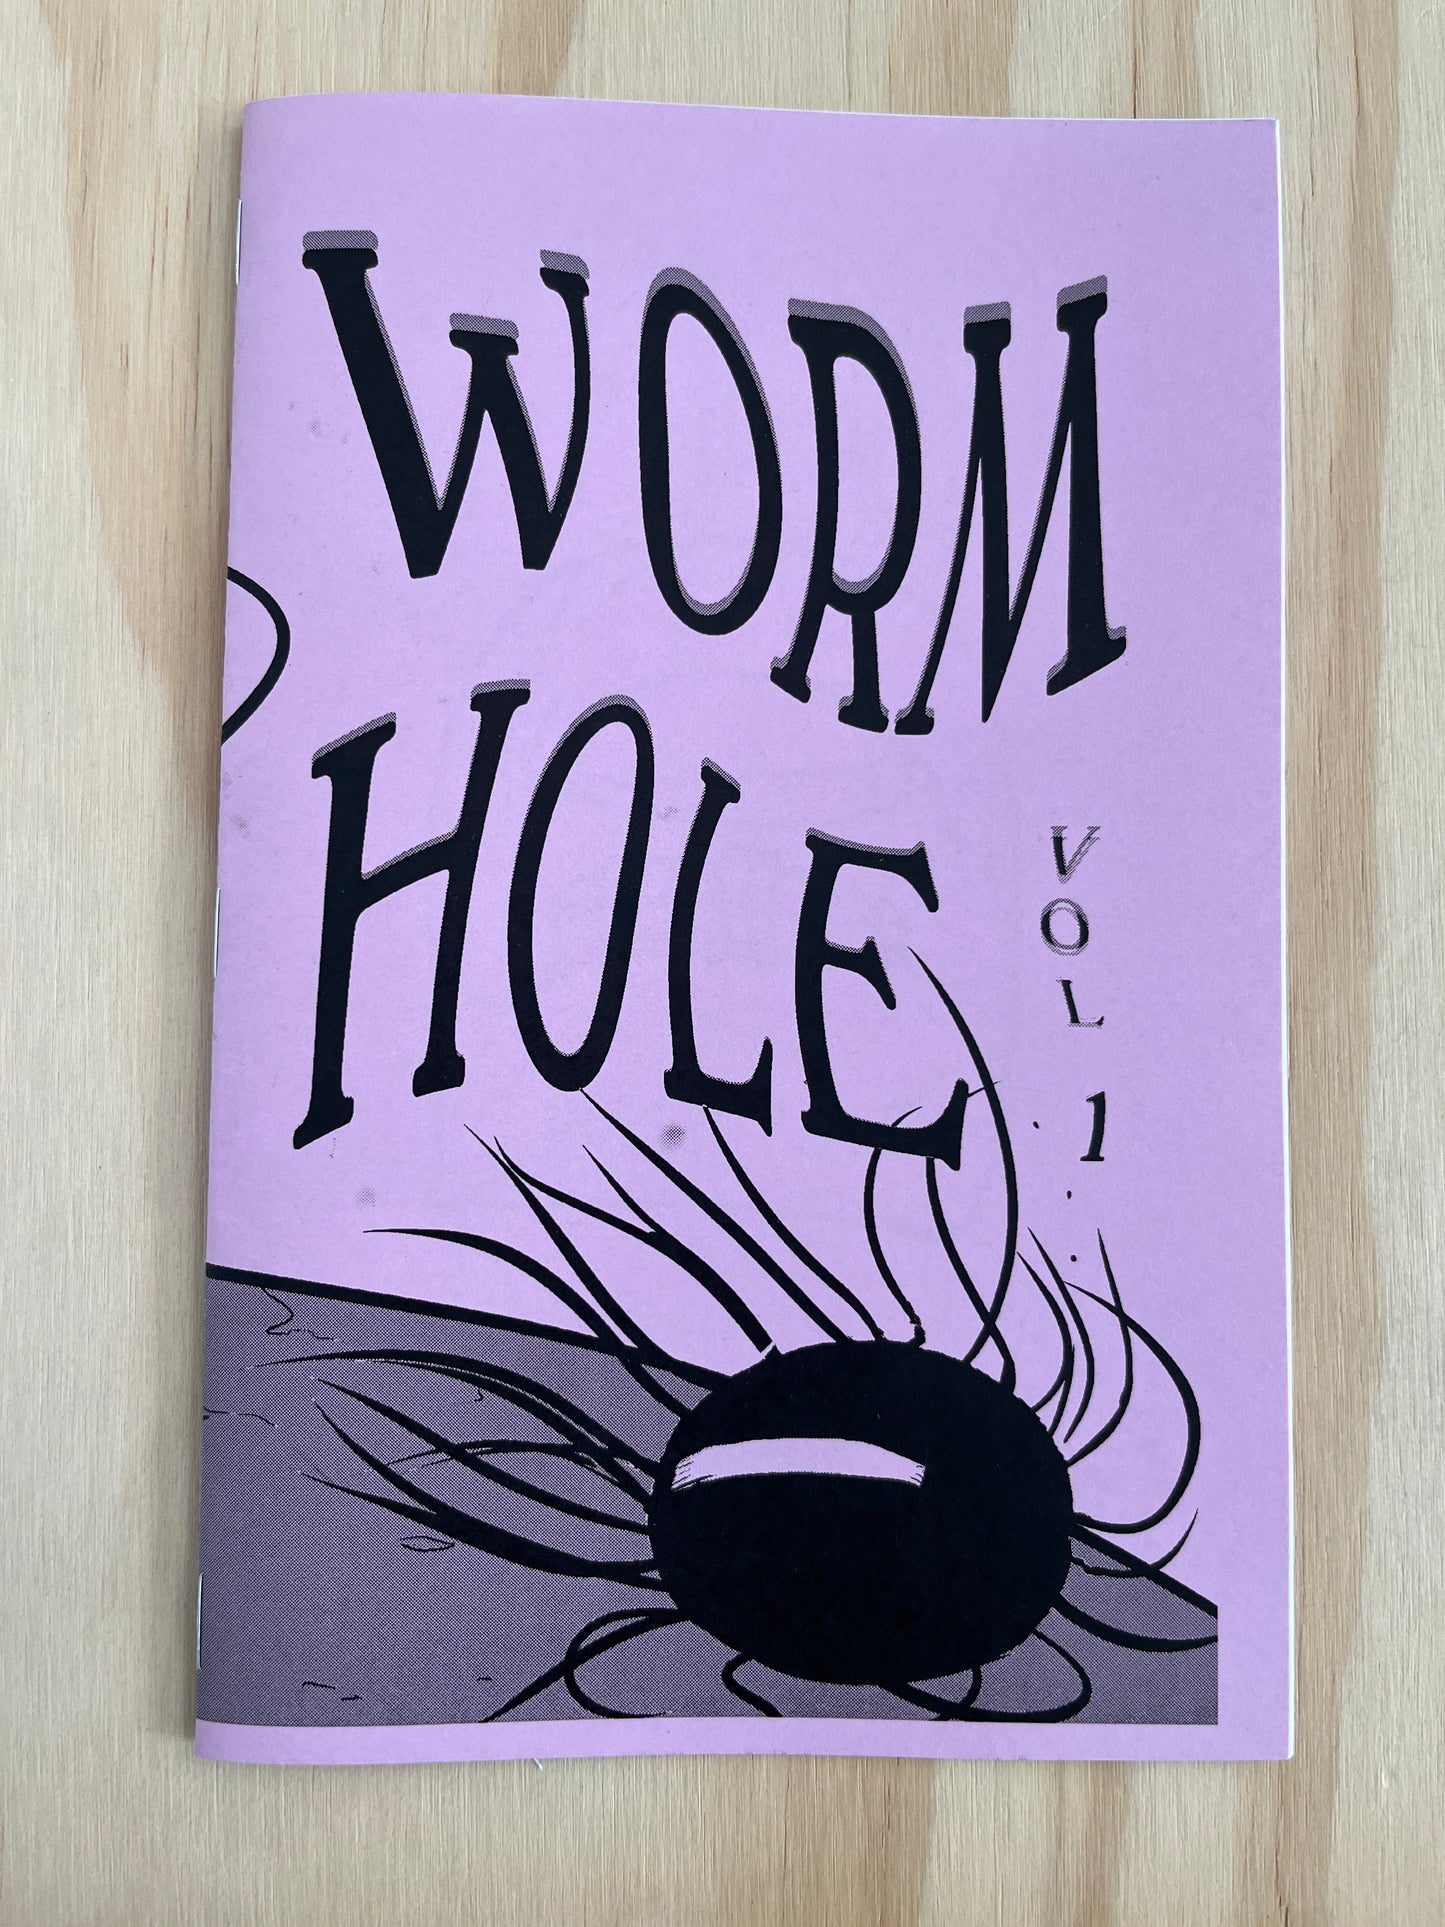 Worm Hole Vol. 1